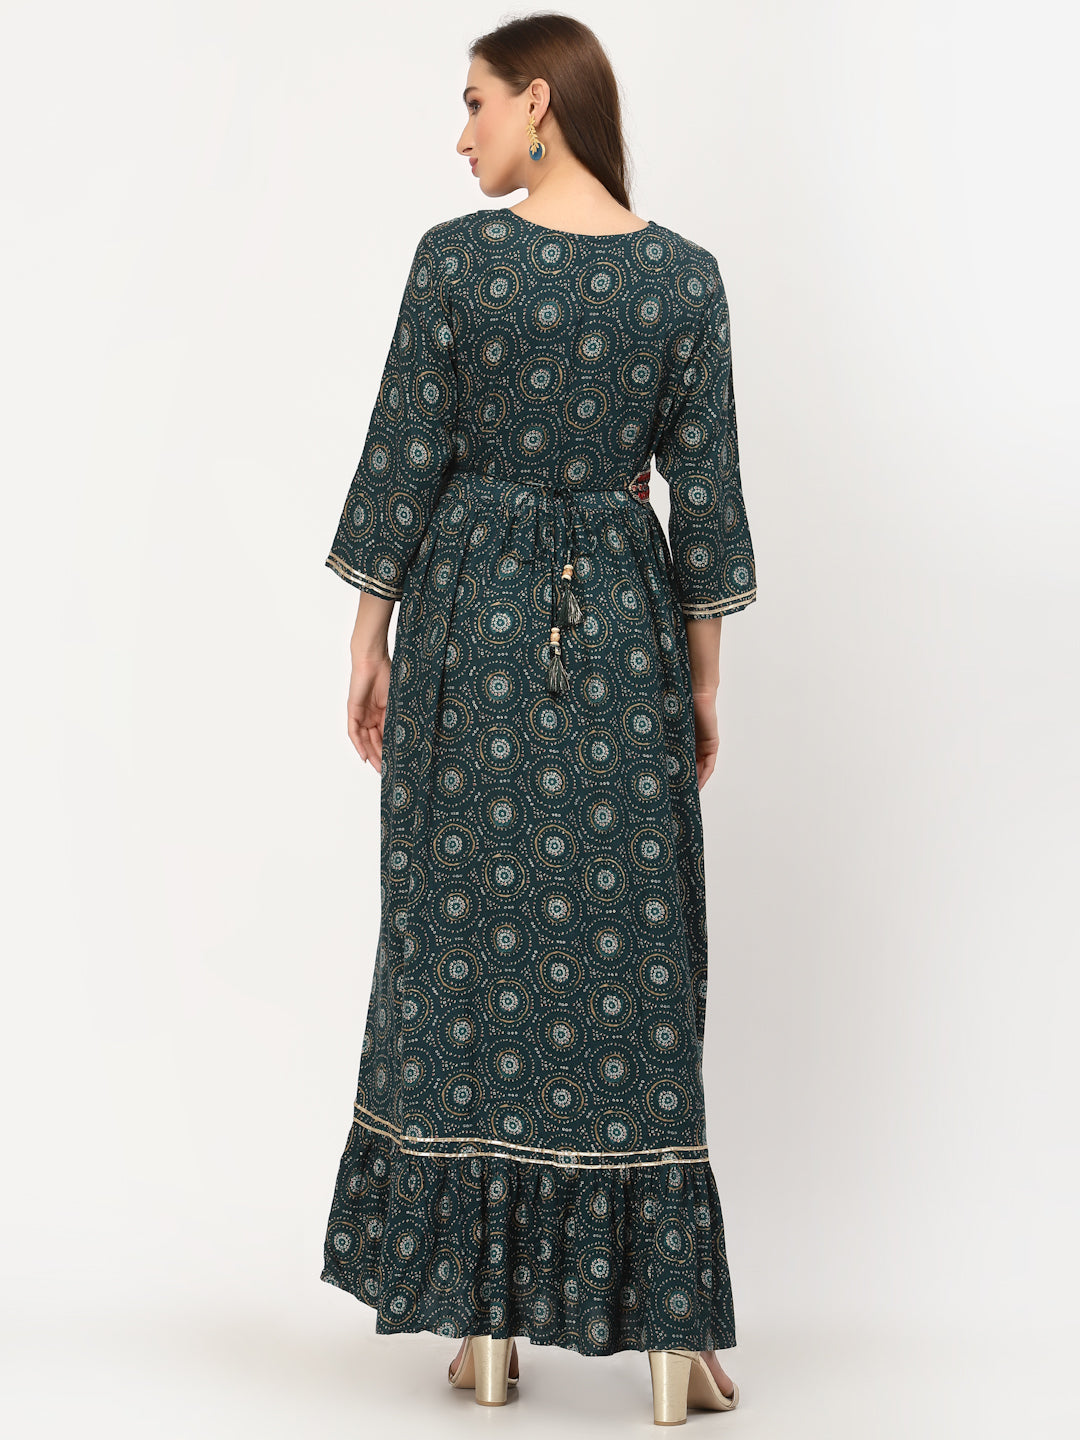 Teal Bandhani Printed Ruffled Dress With Tie Up Belt - ARH1465G